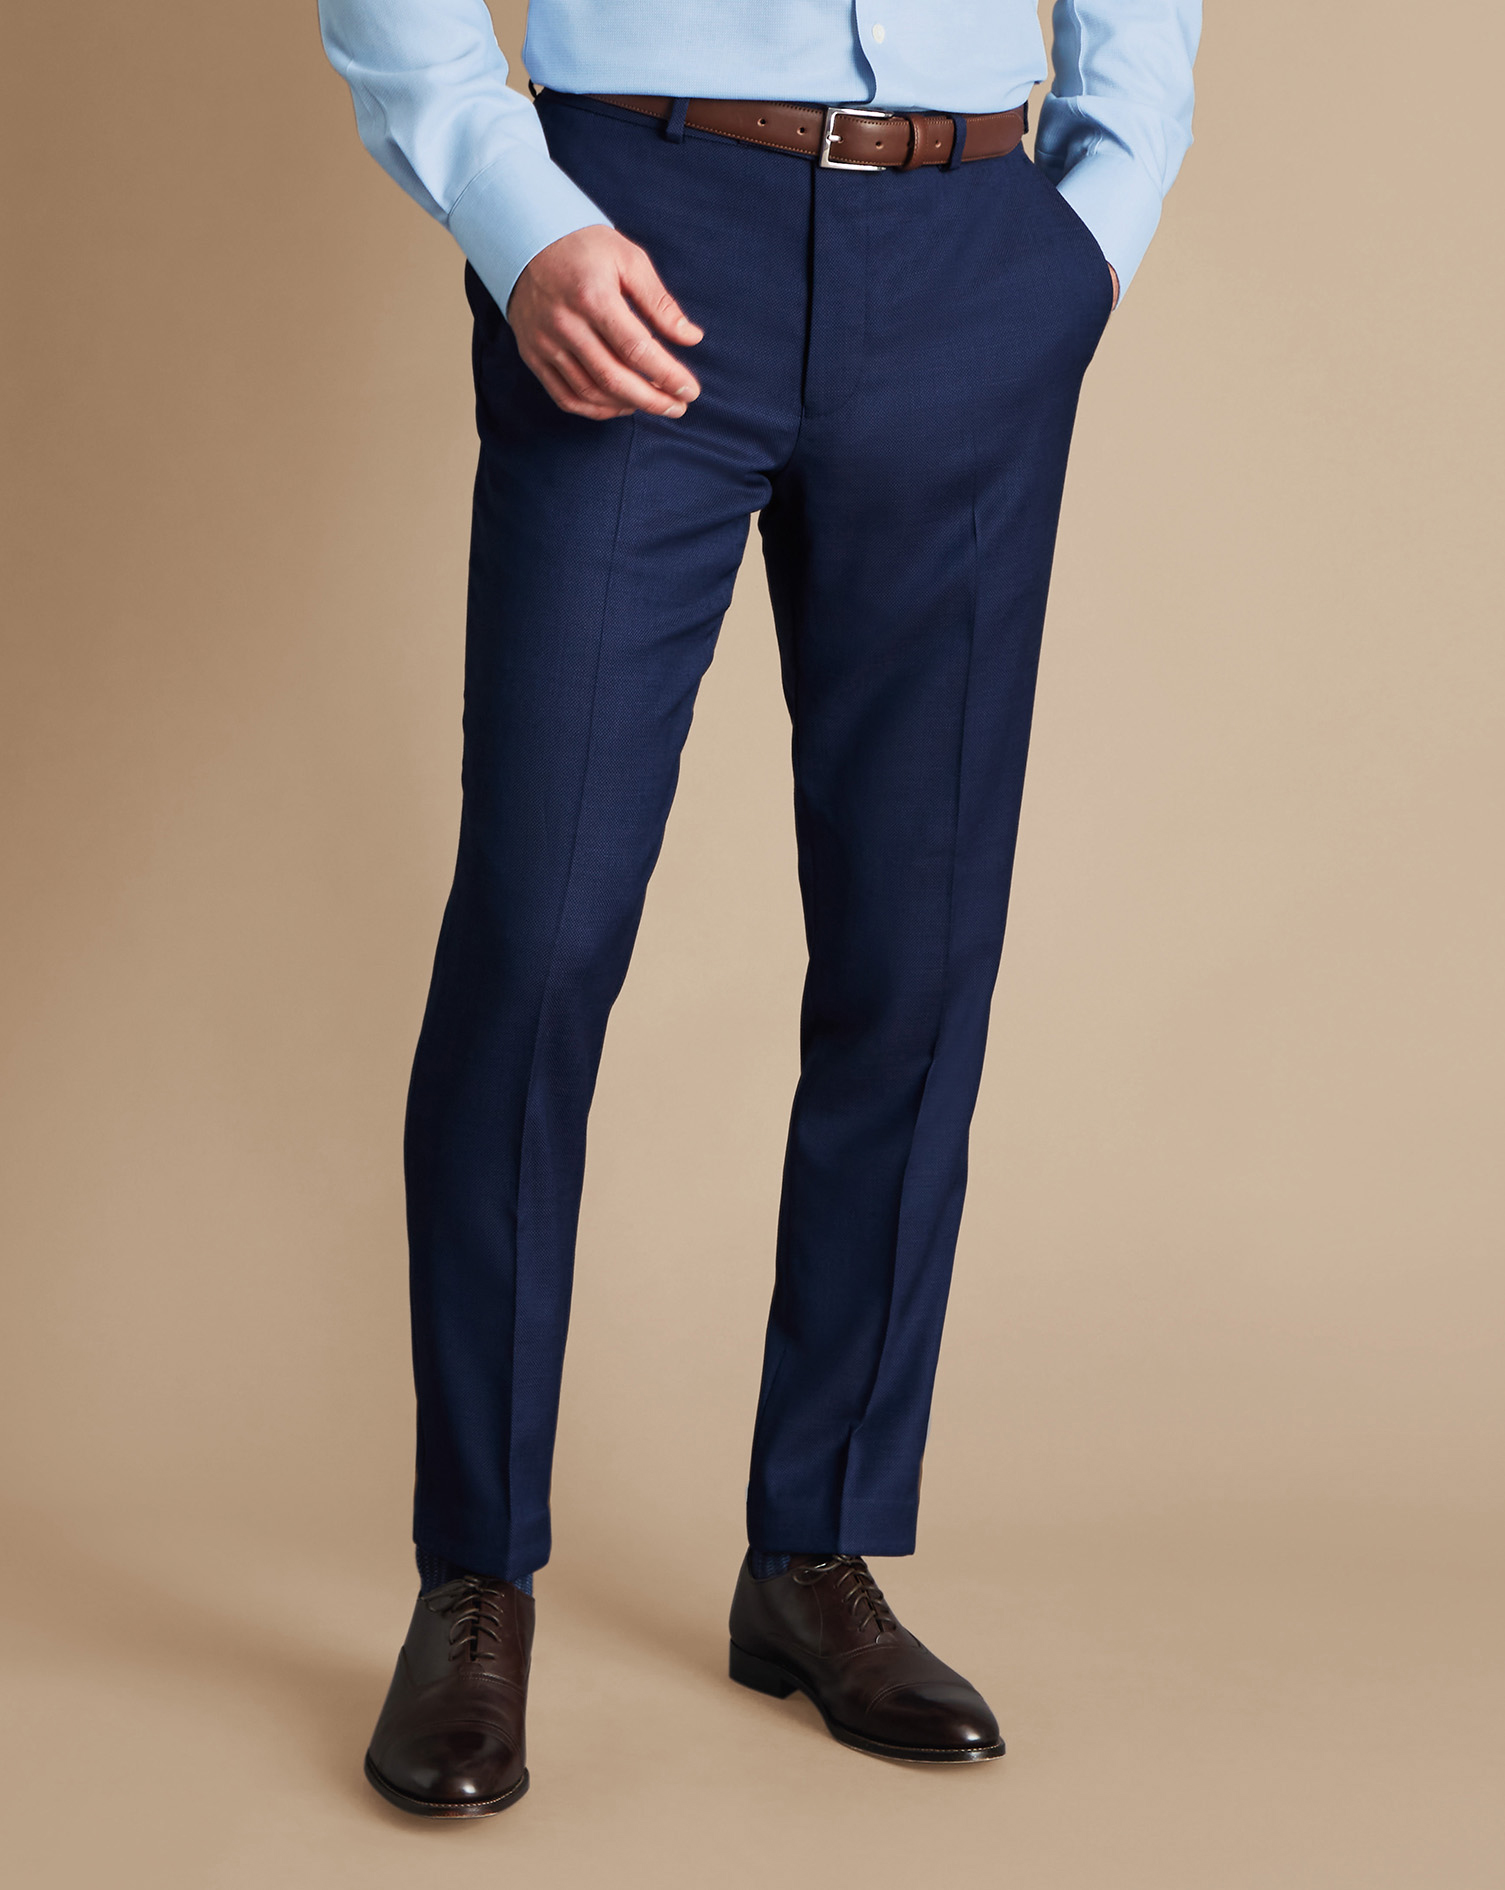 Indigo Blue Birdseye Ultimate Performance Suit Trousers Size 38/32
